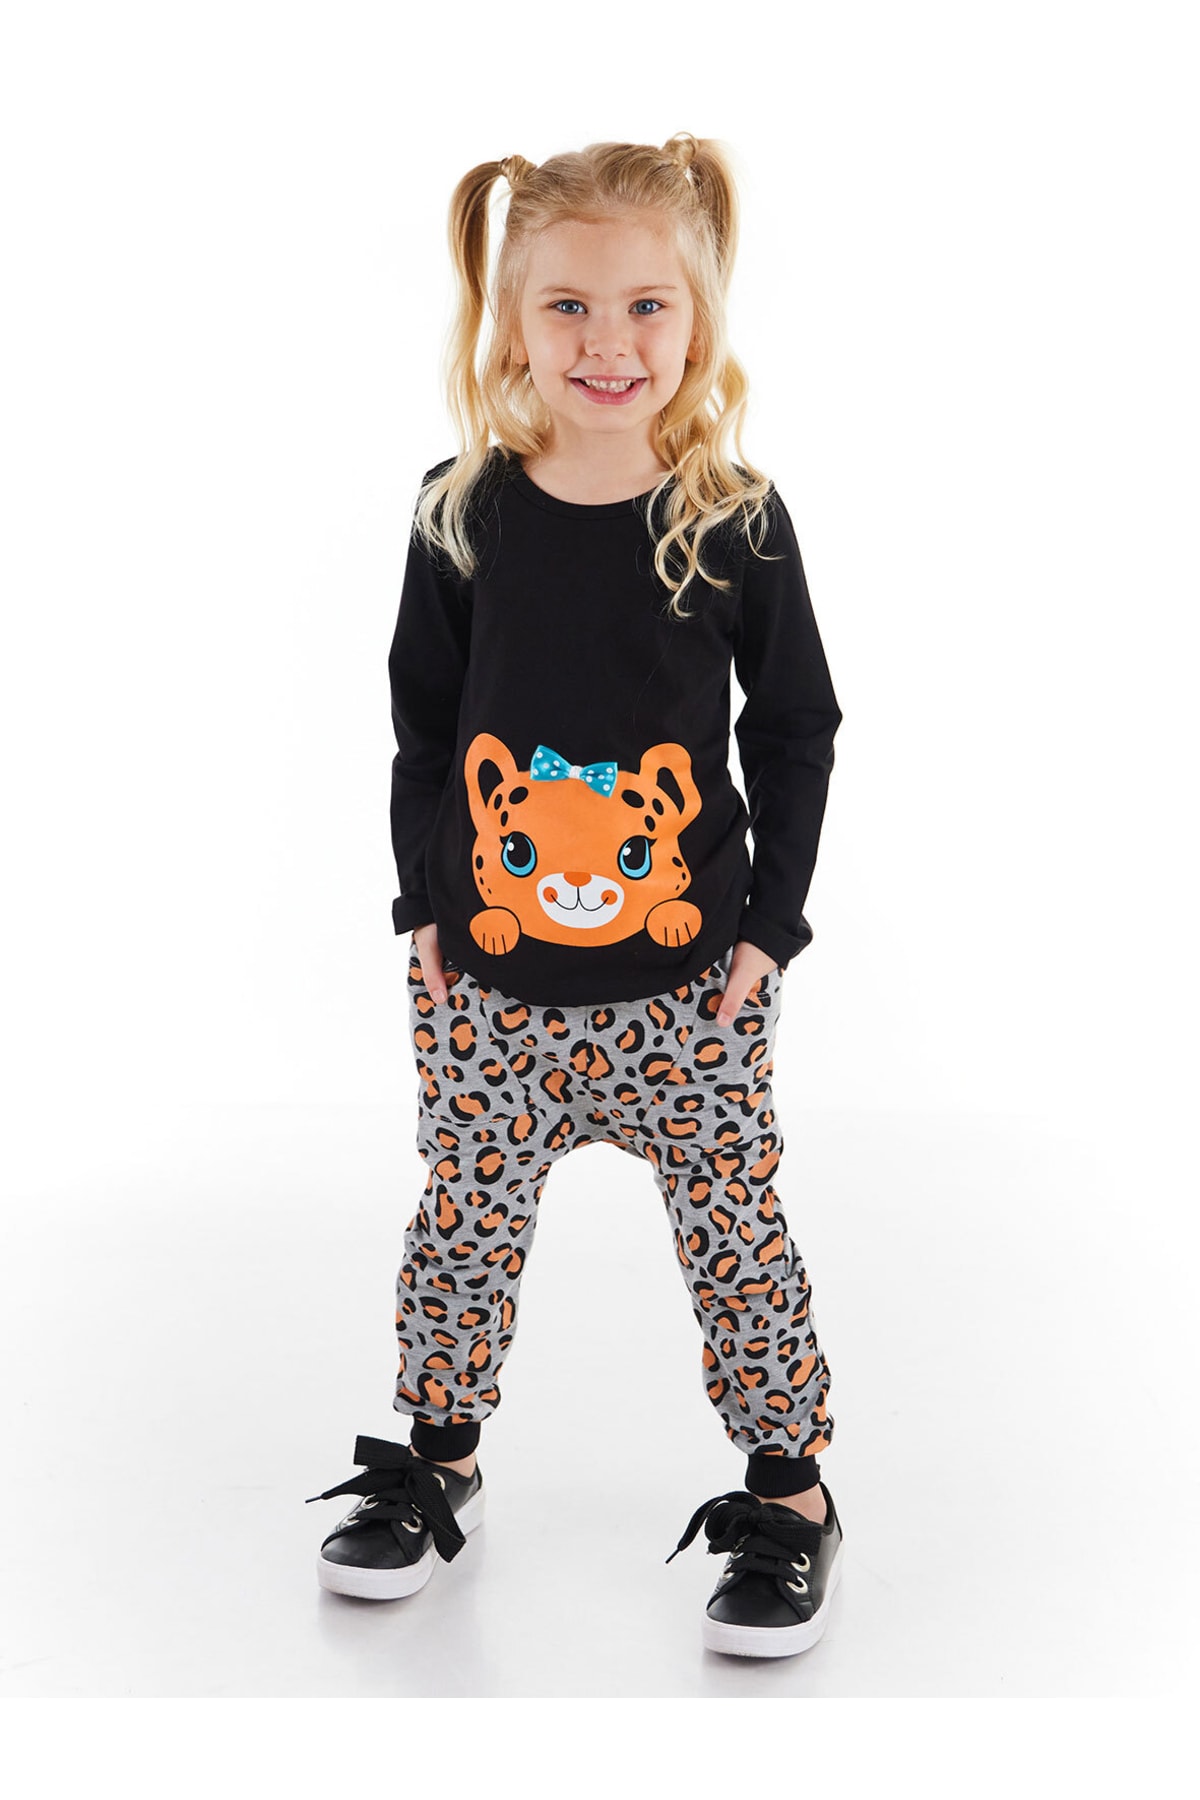 Denokids Little Leopard Girl Kids T-shirt Pants Suit